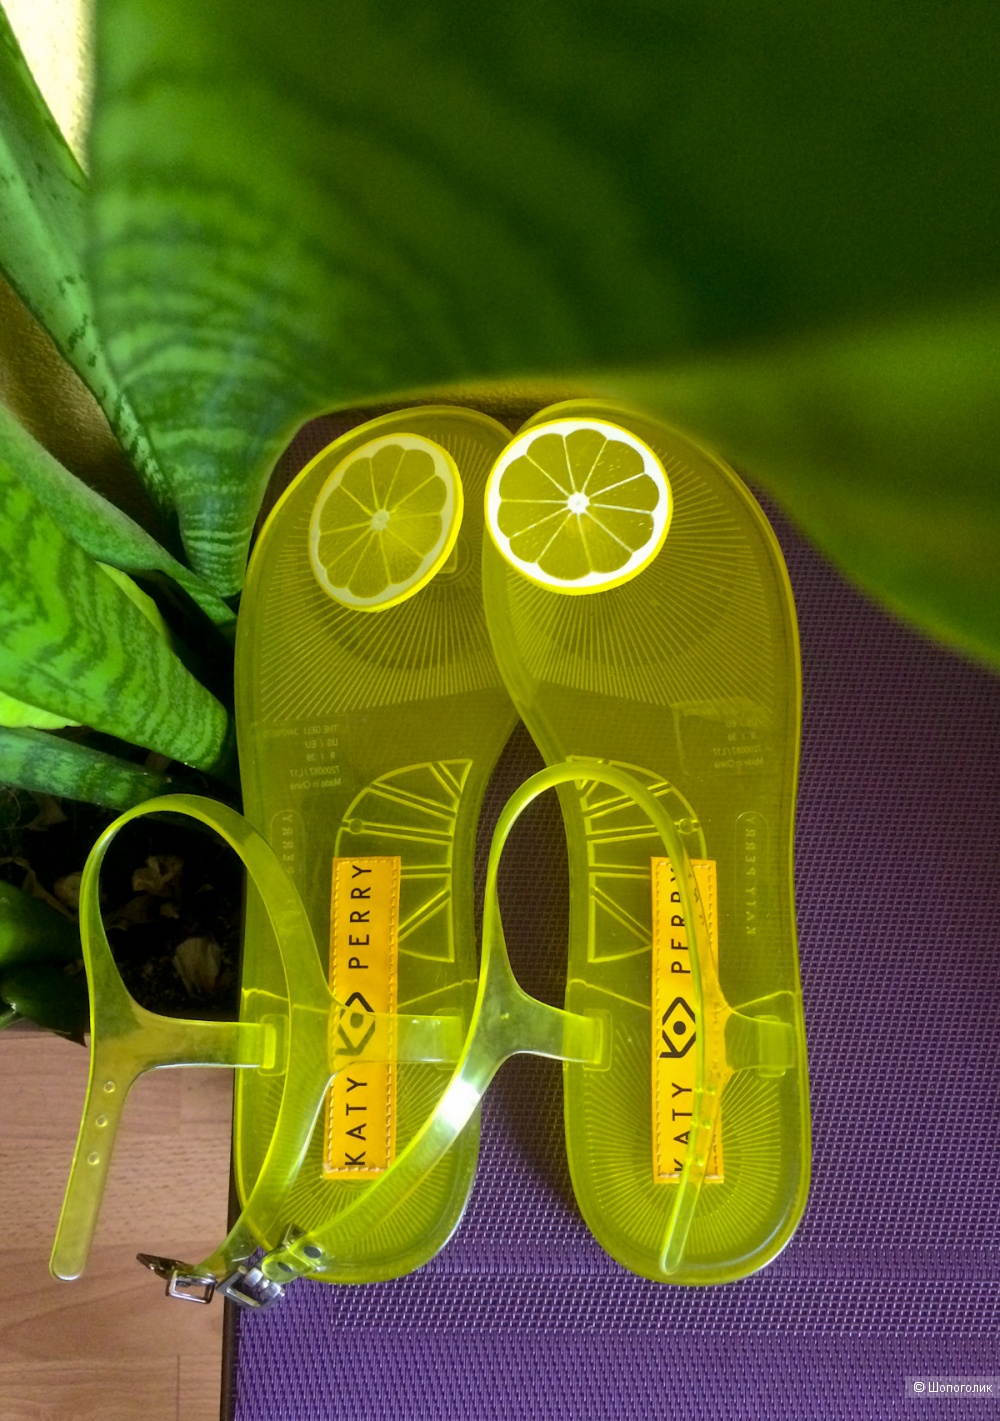 Босоножки Katy Perry Lemon Jelly Sandals, 39 рр